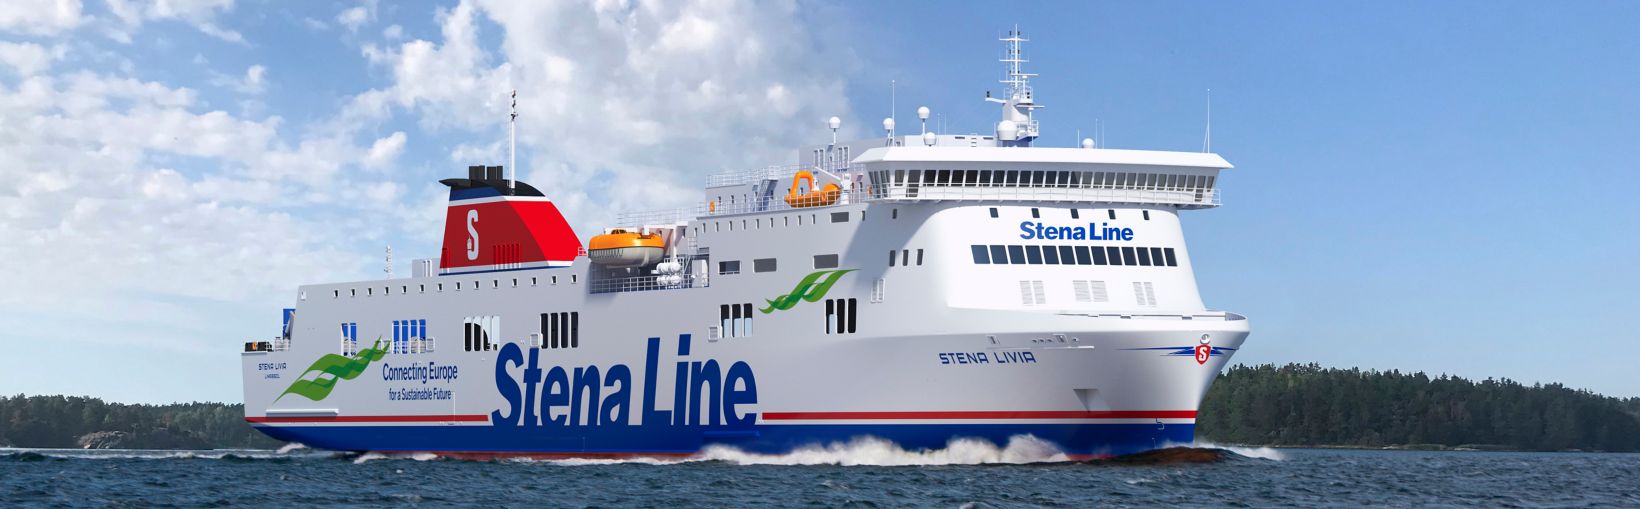 Stena Livia ferry en el mar